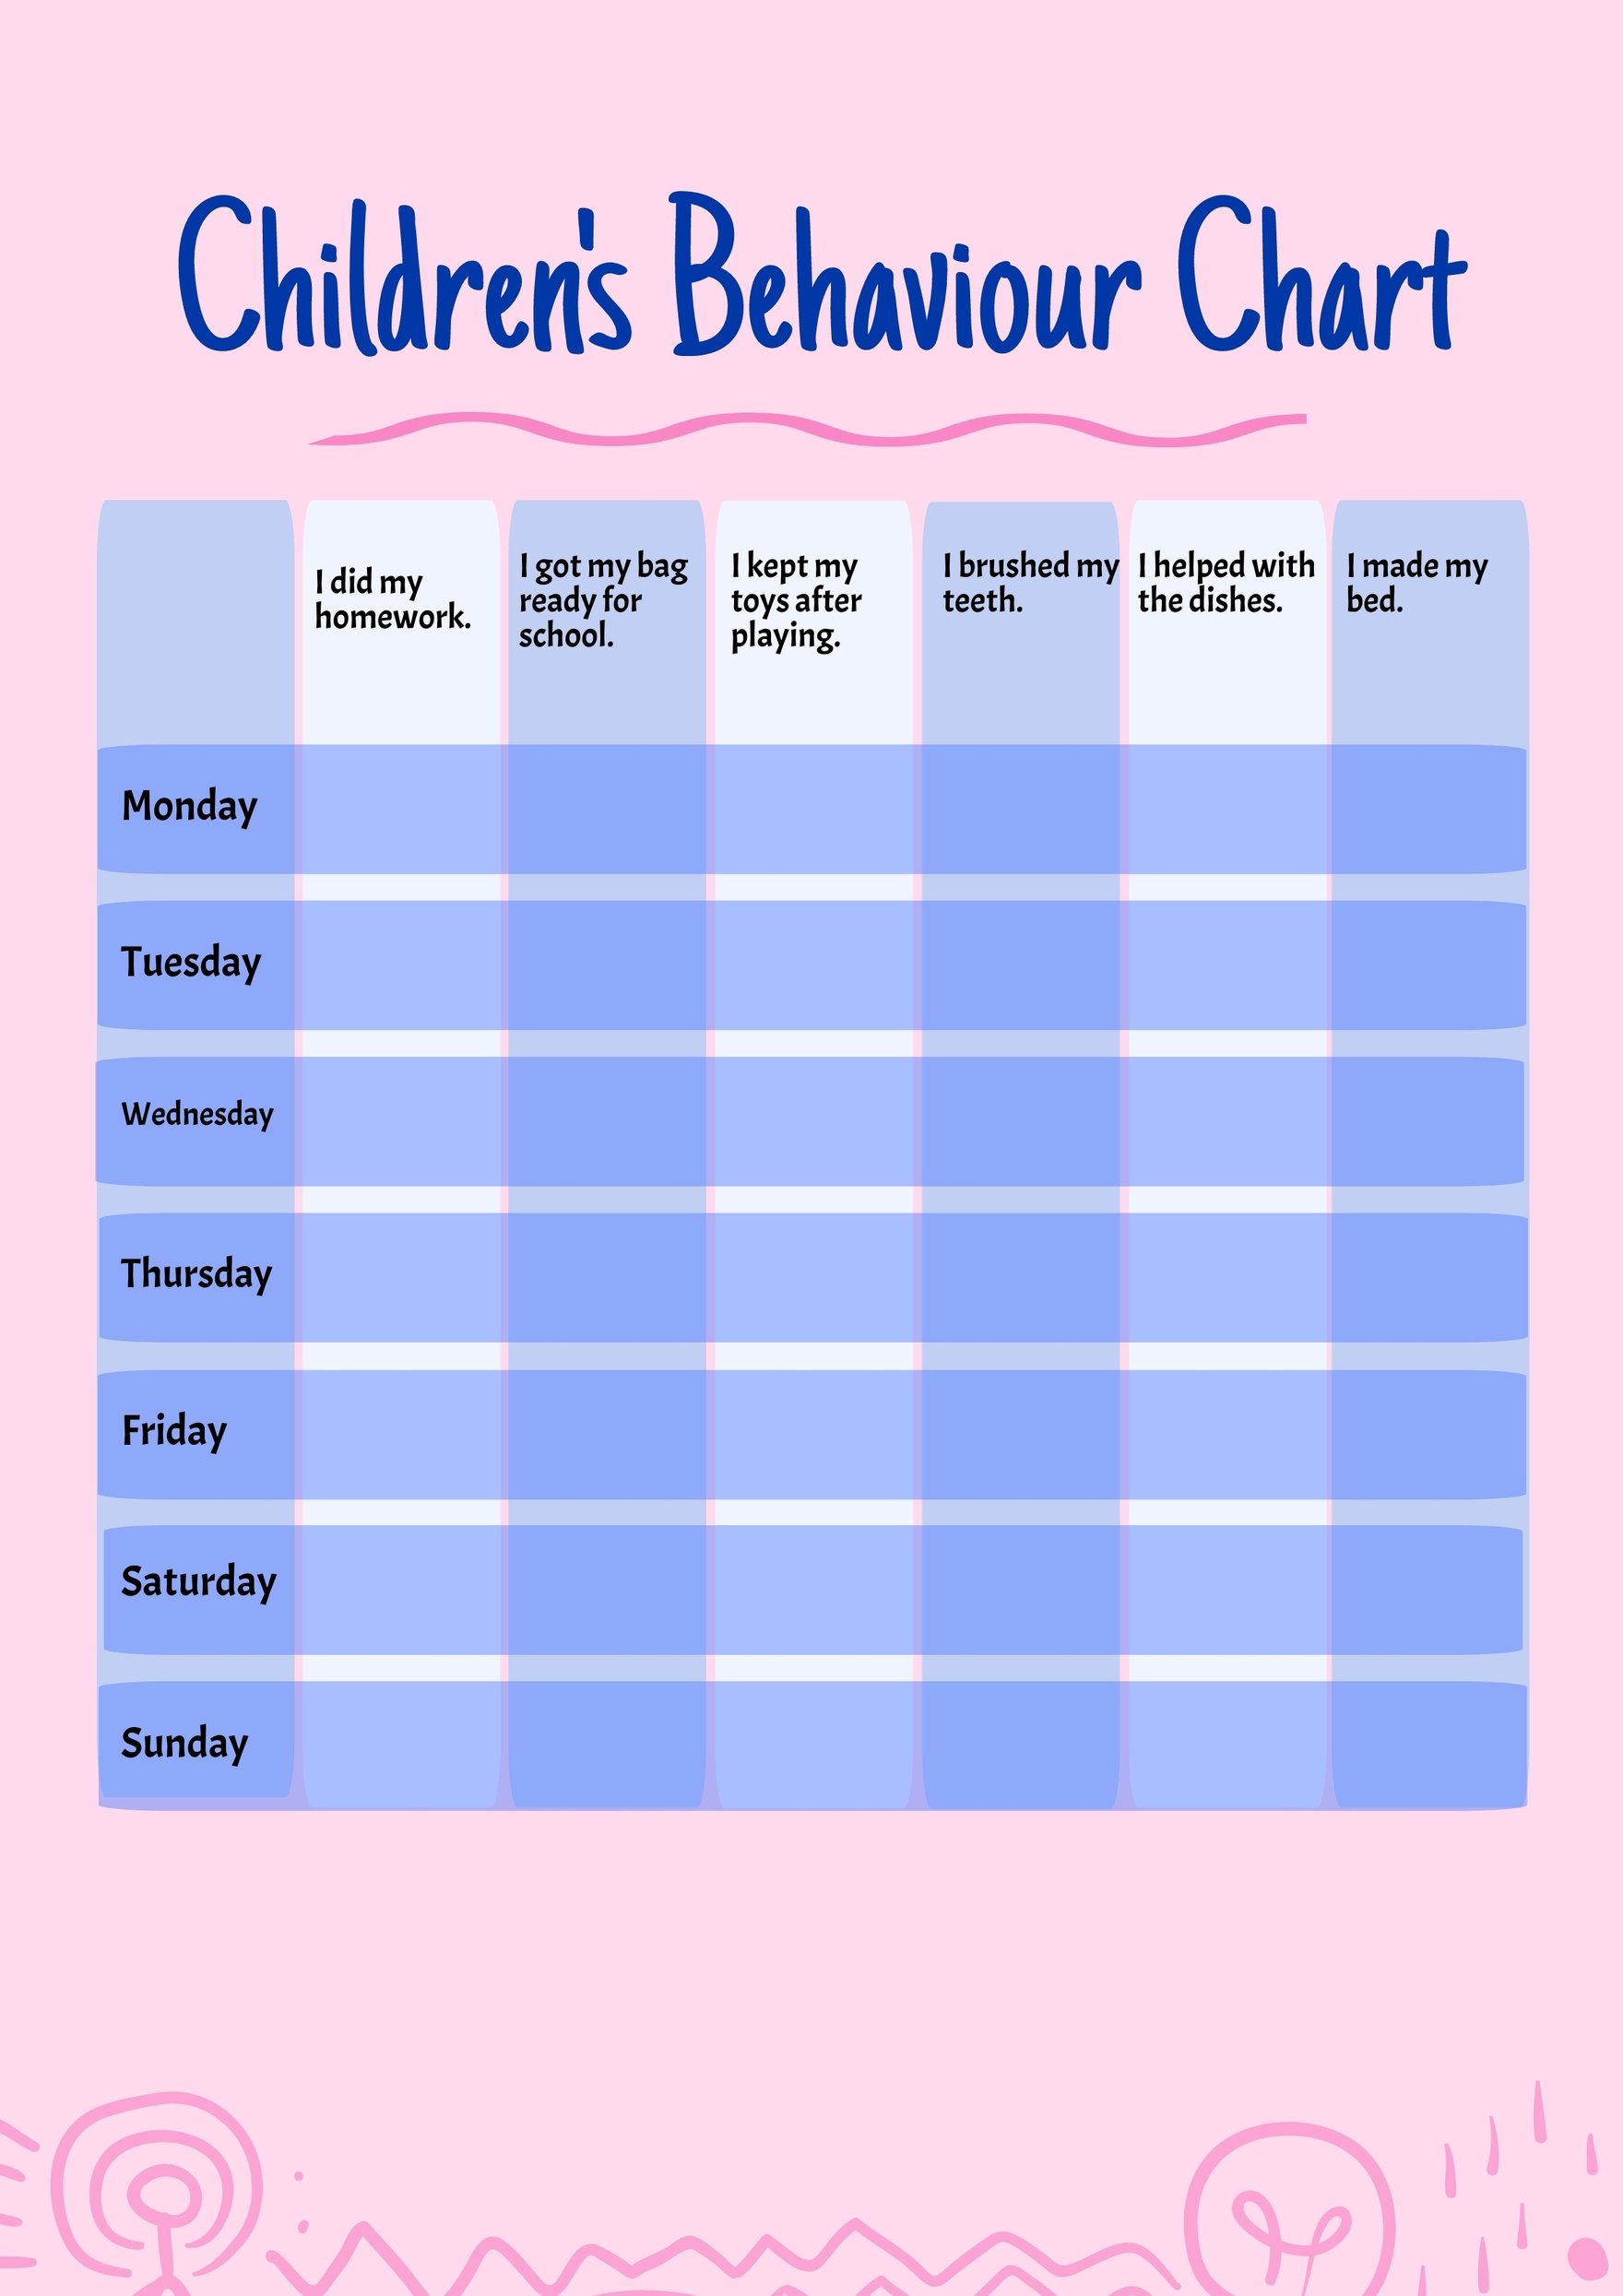 Children's Behaviour Chart